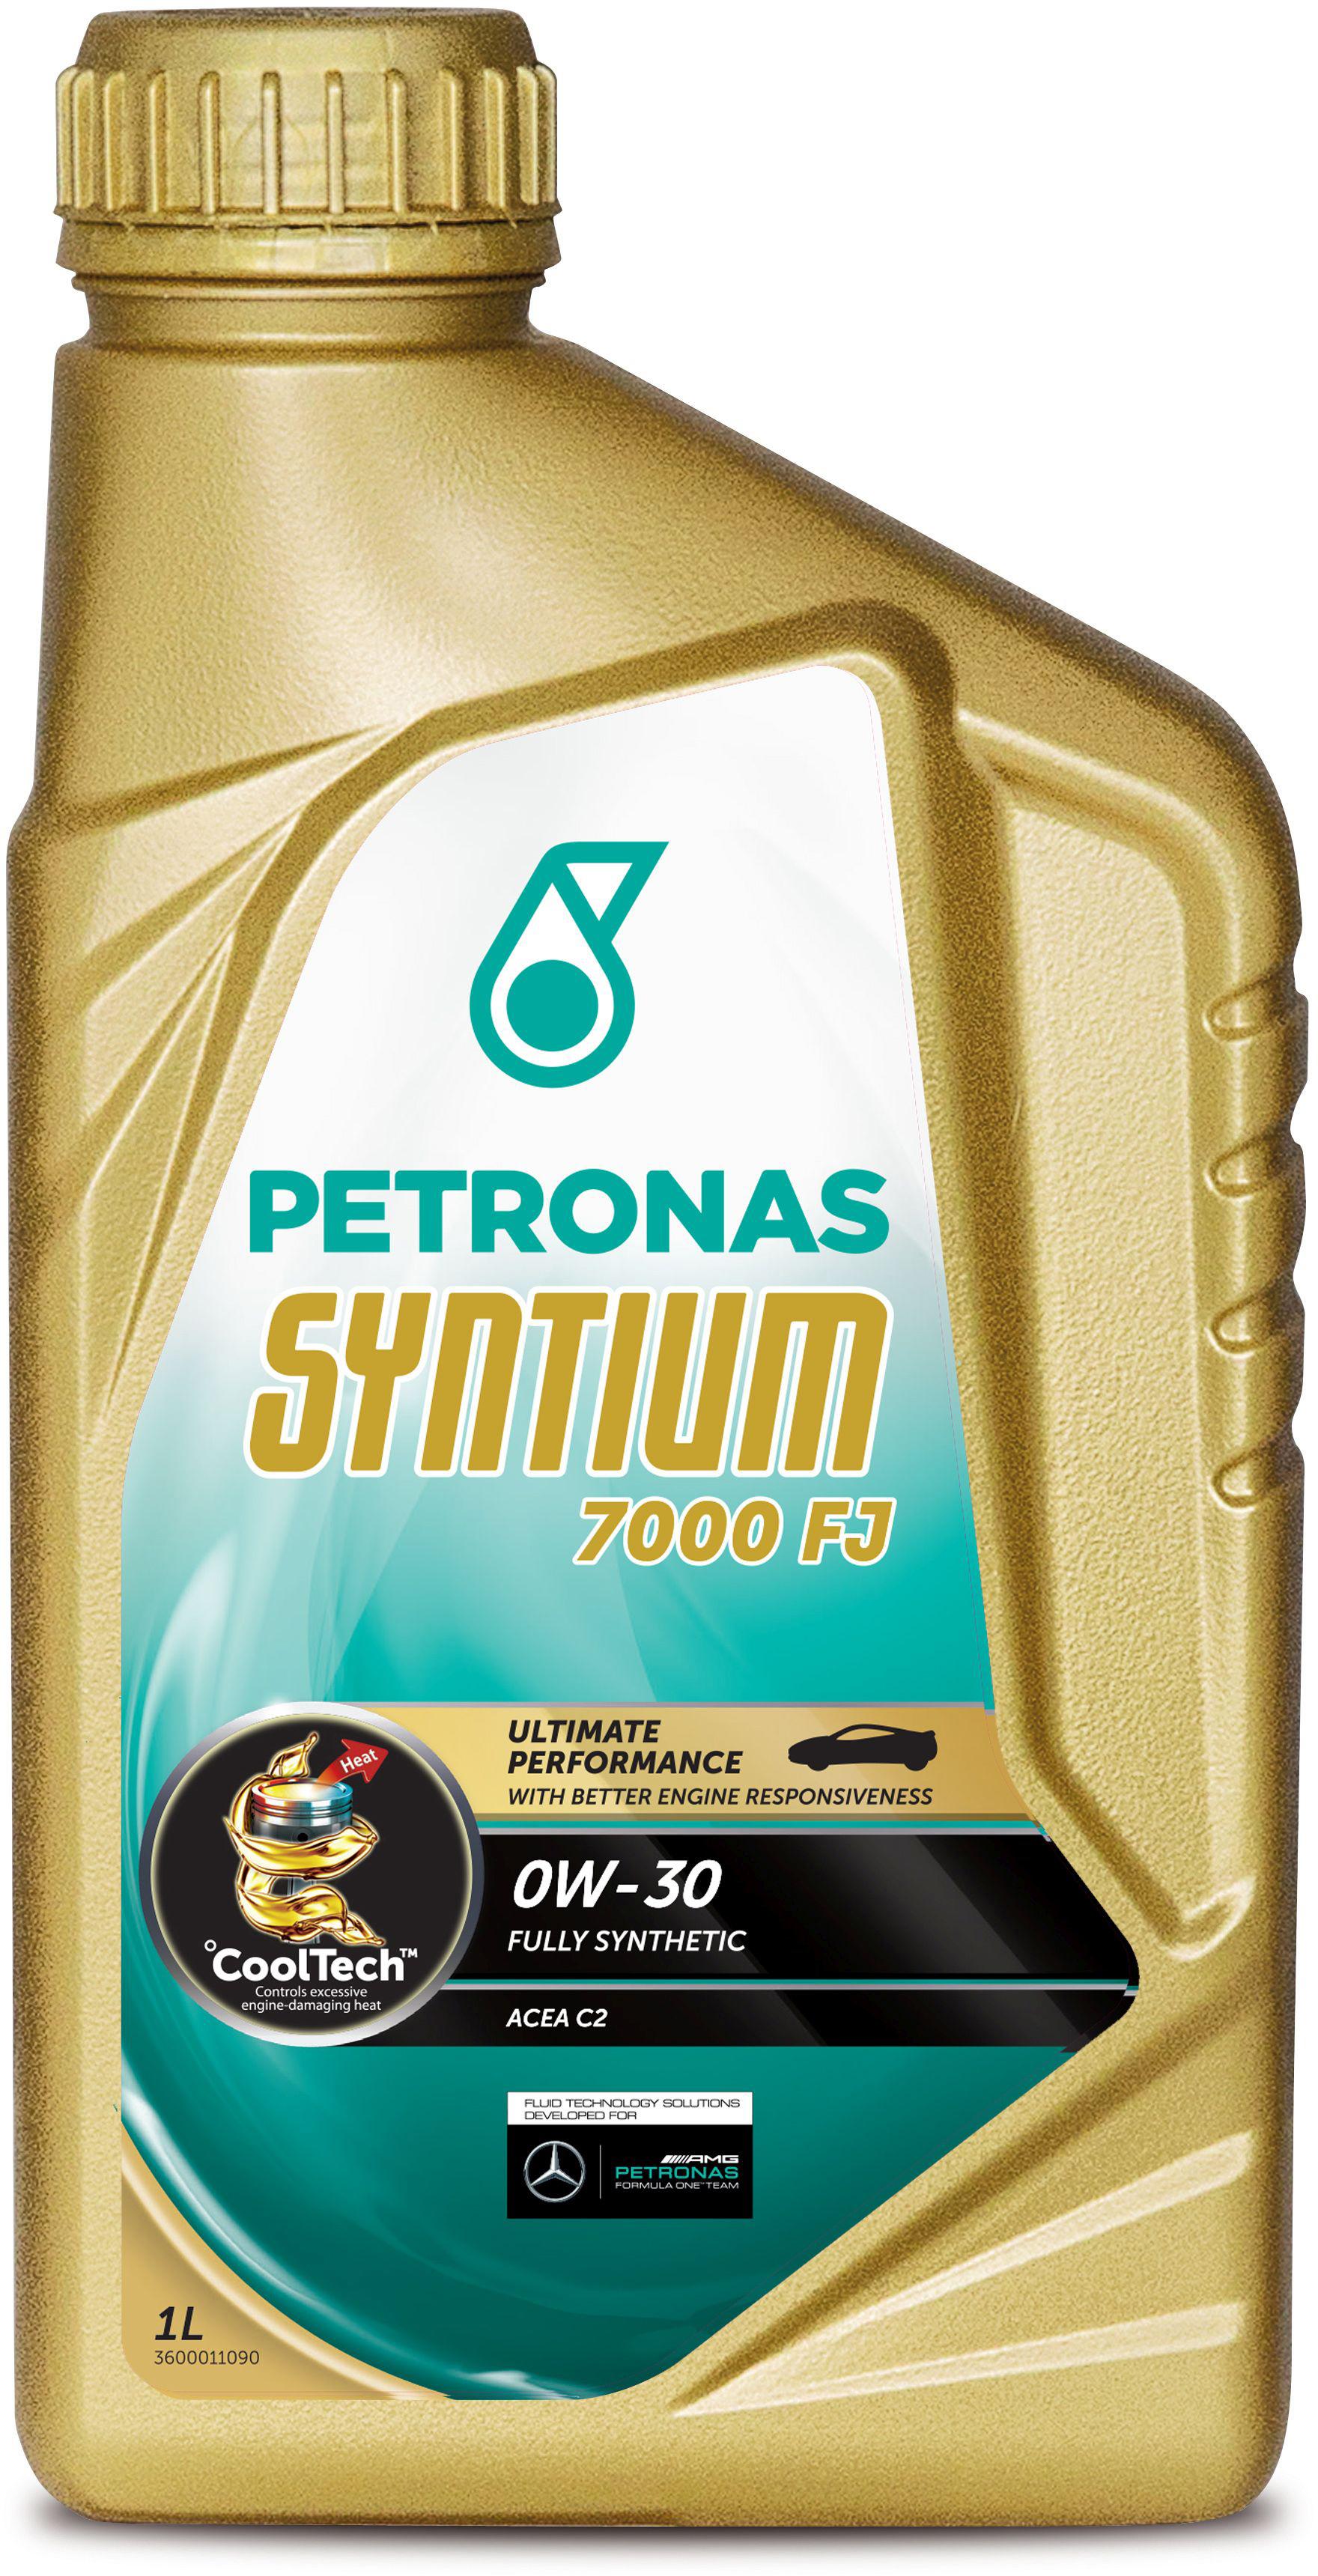 Petronas Syntium 7000 Fj Engine Oil 1L